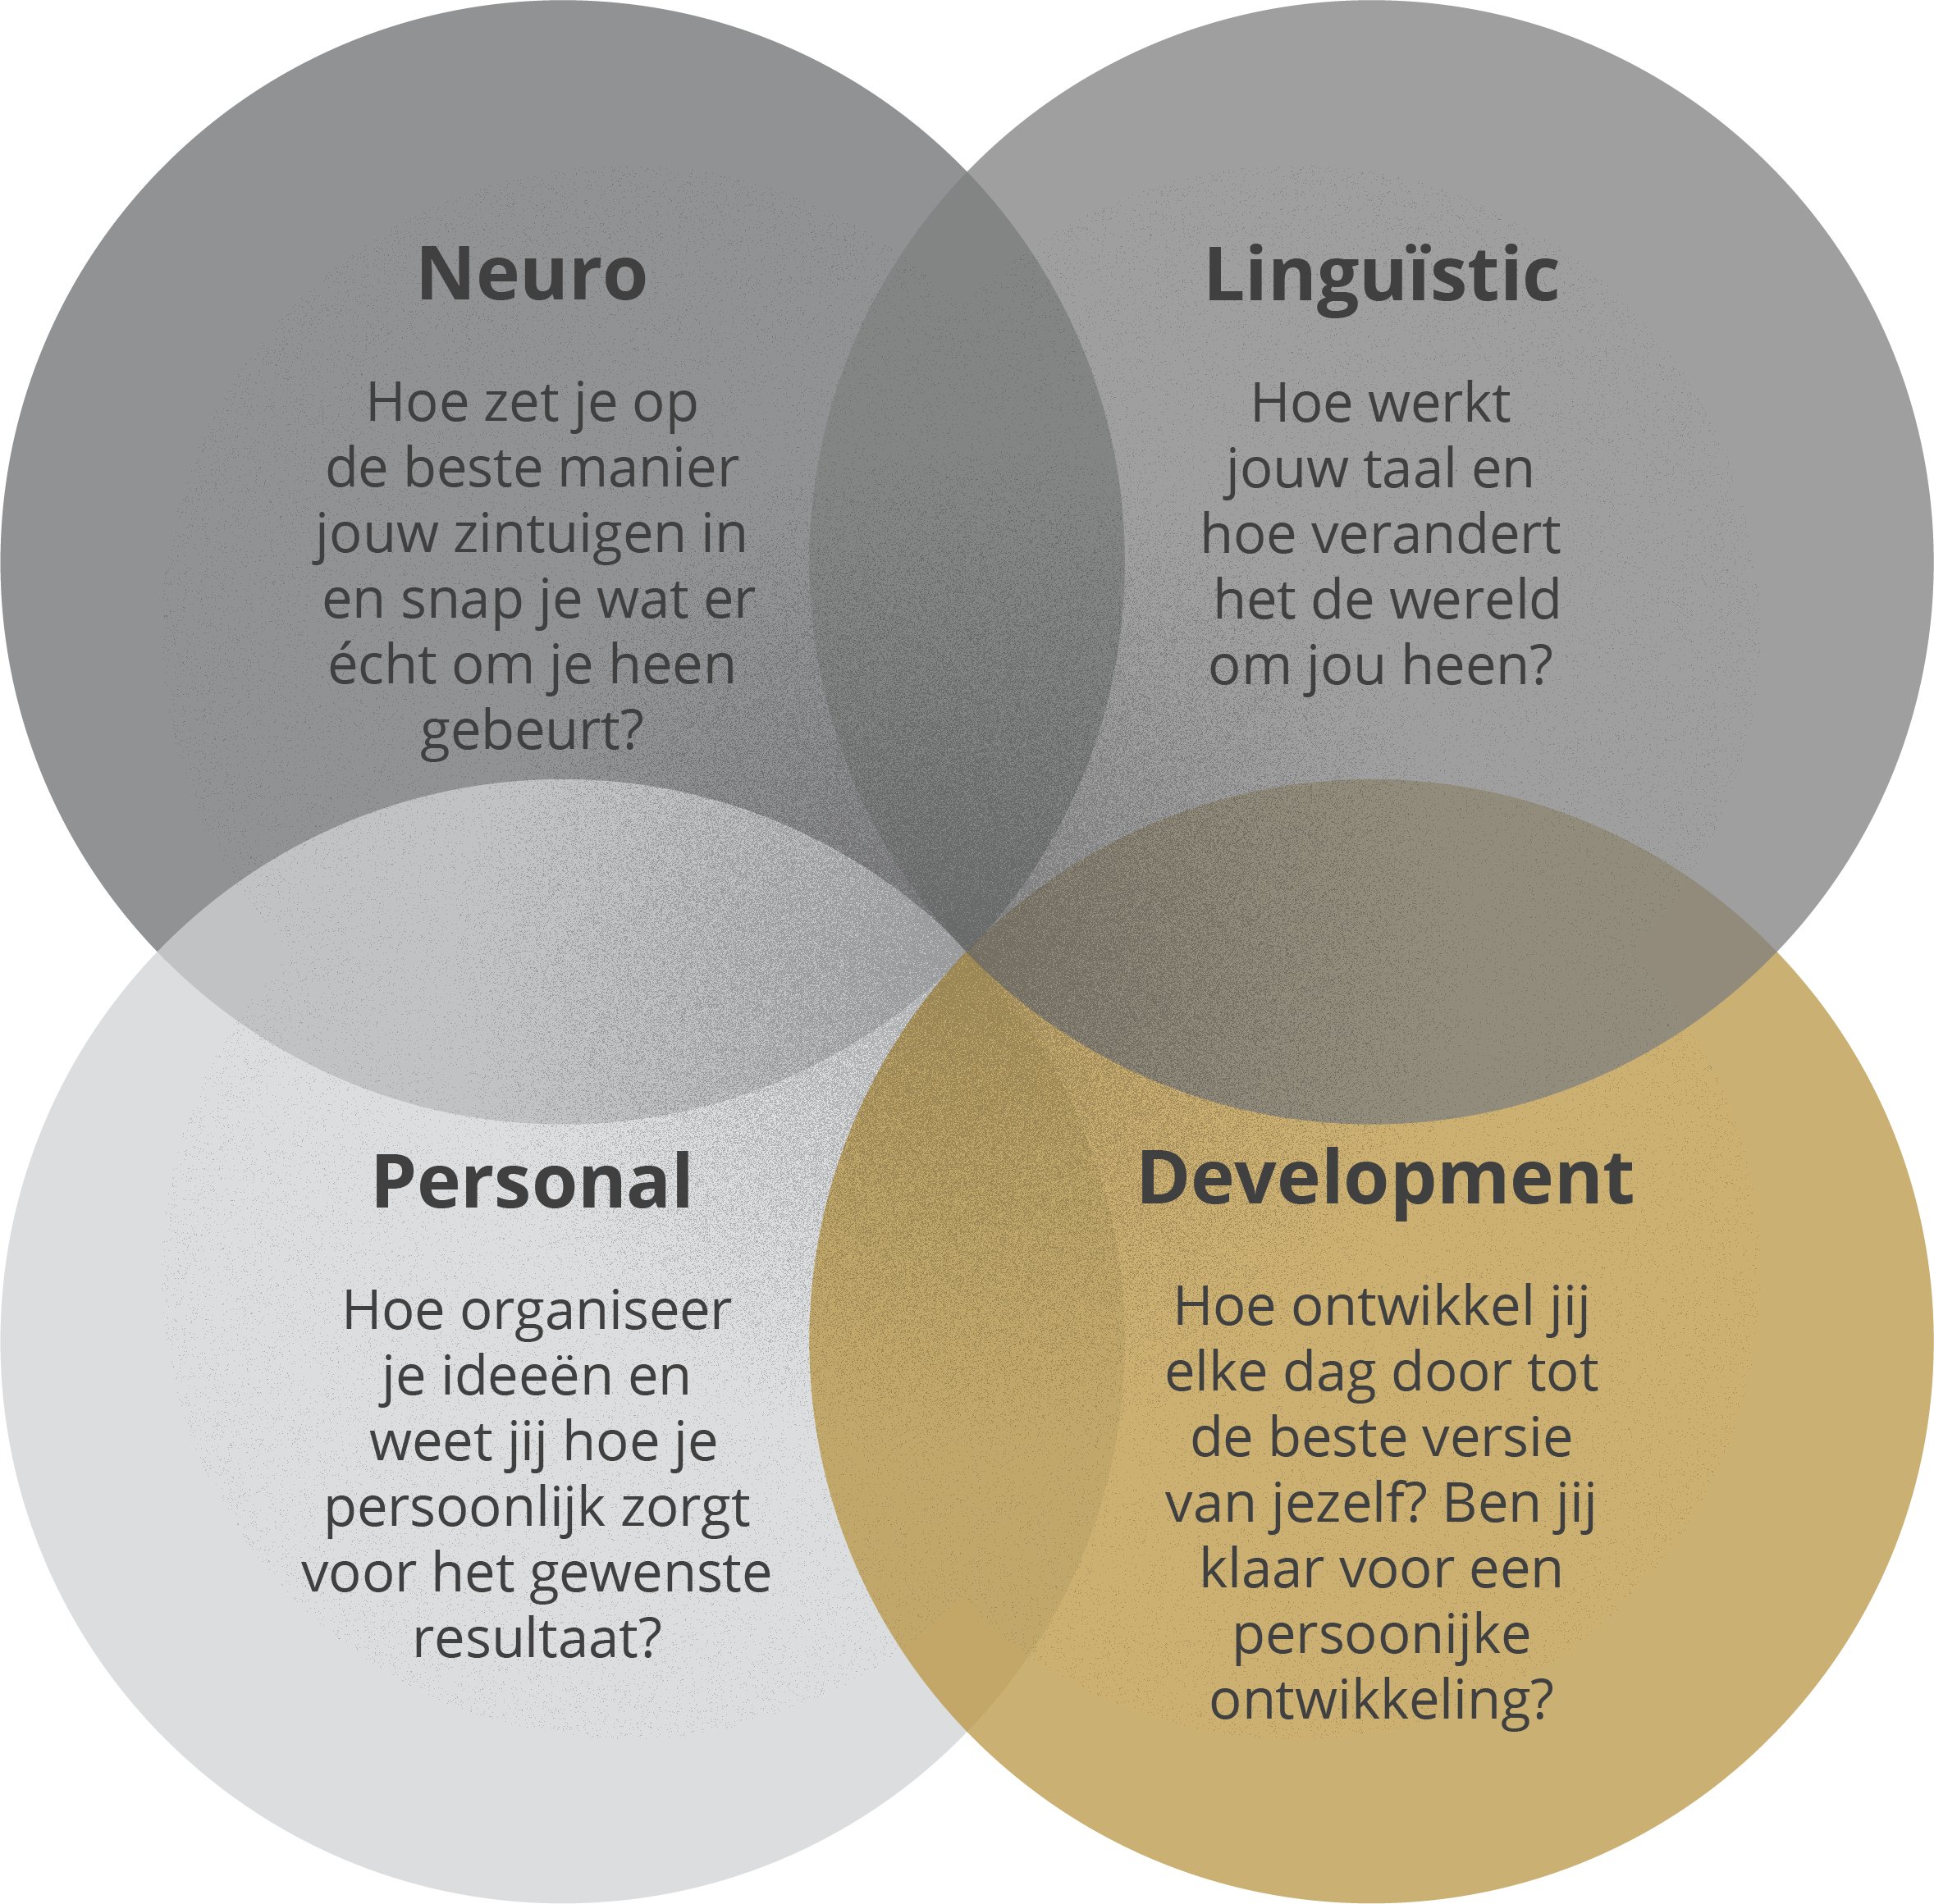 NLPD: Neuro Linguïstic Personal Development